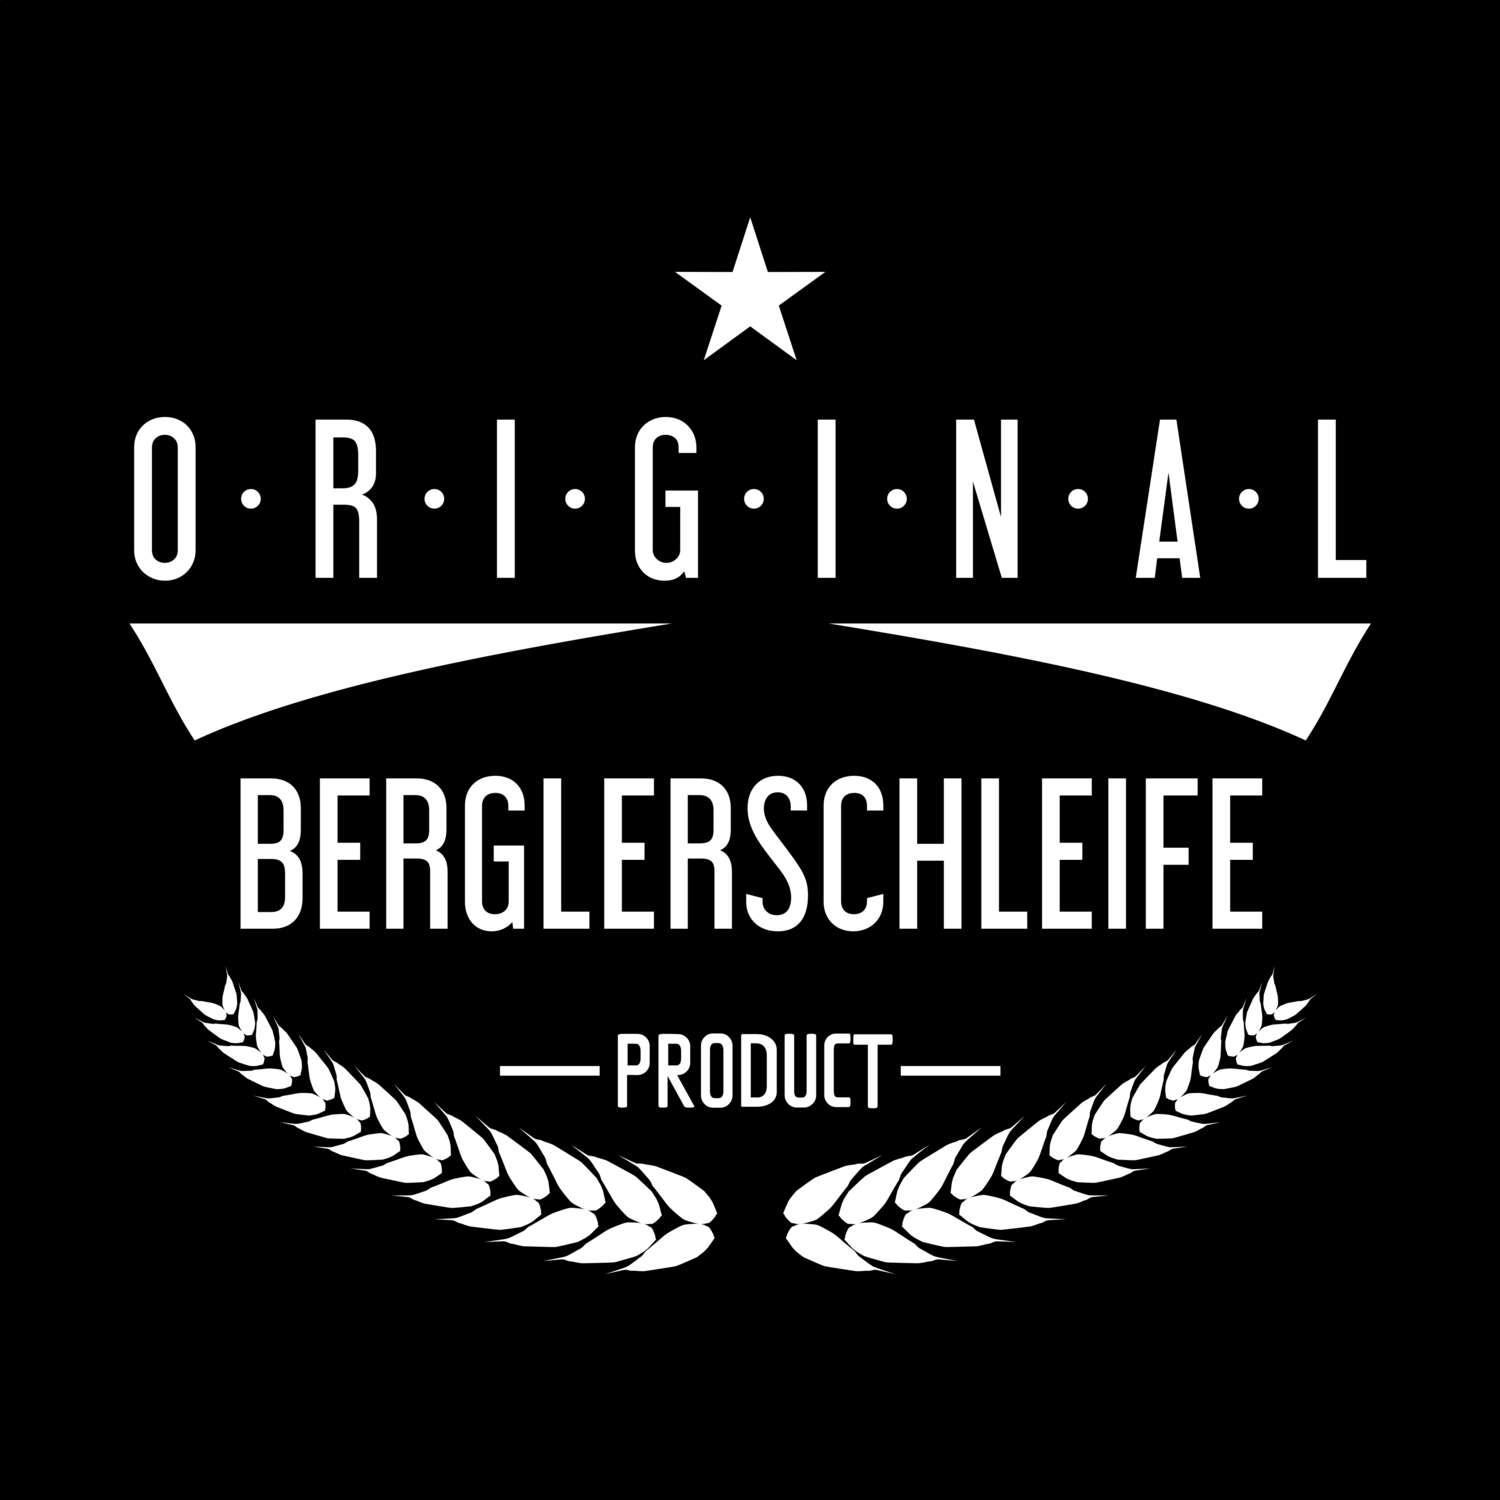 Berglerschleife T-Shirt »Original Product«